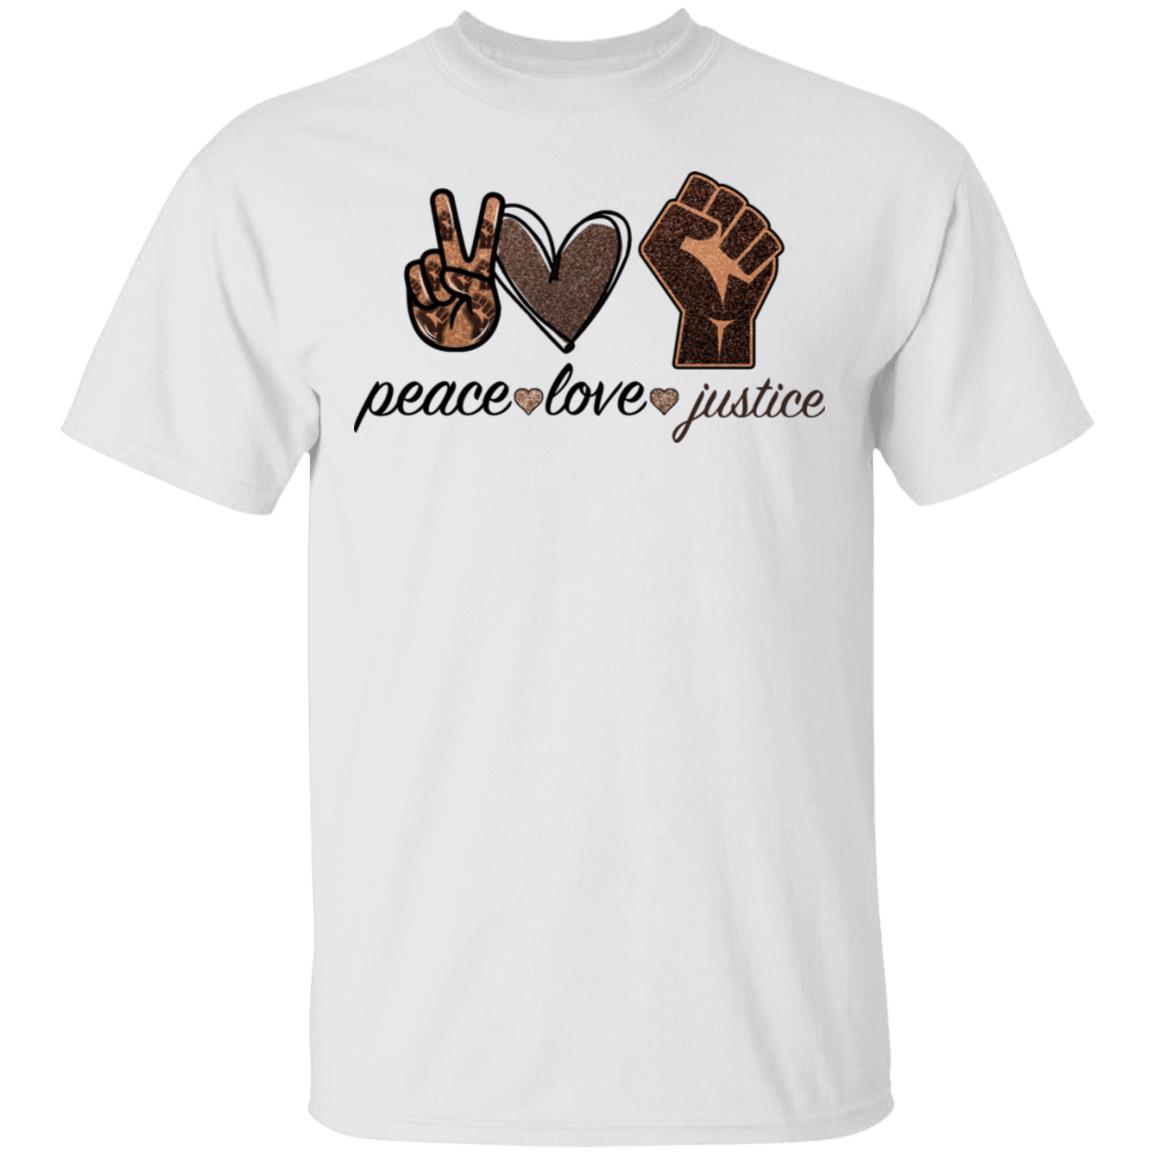 Peace love justice shirt - Rockatee